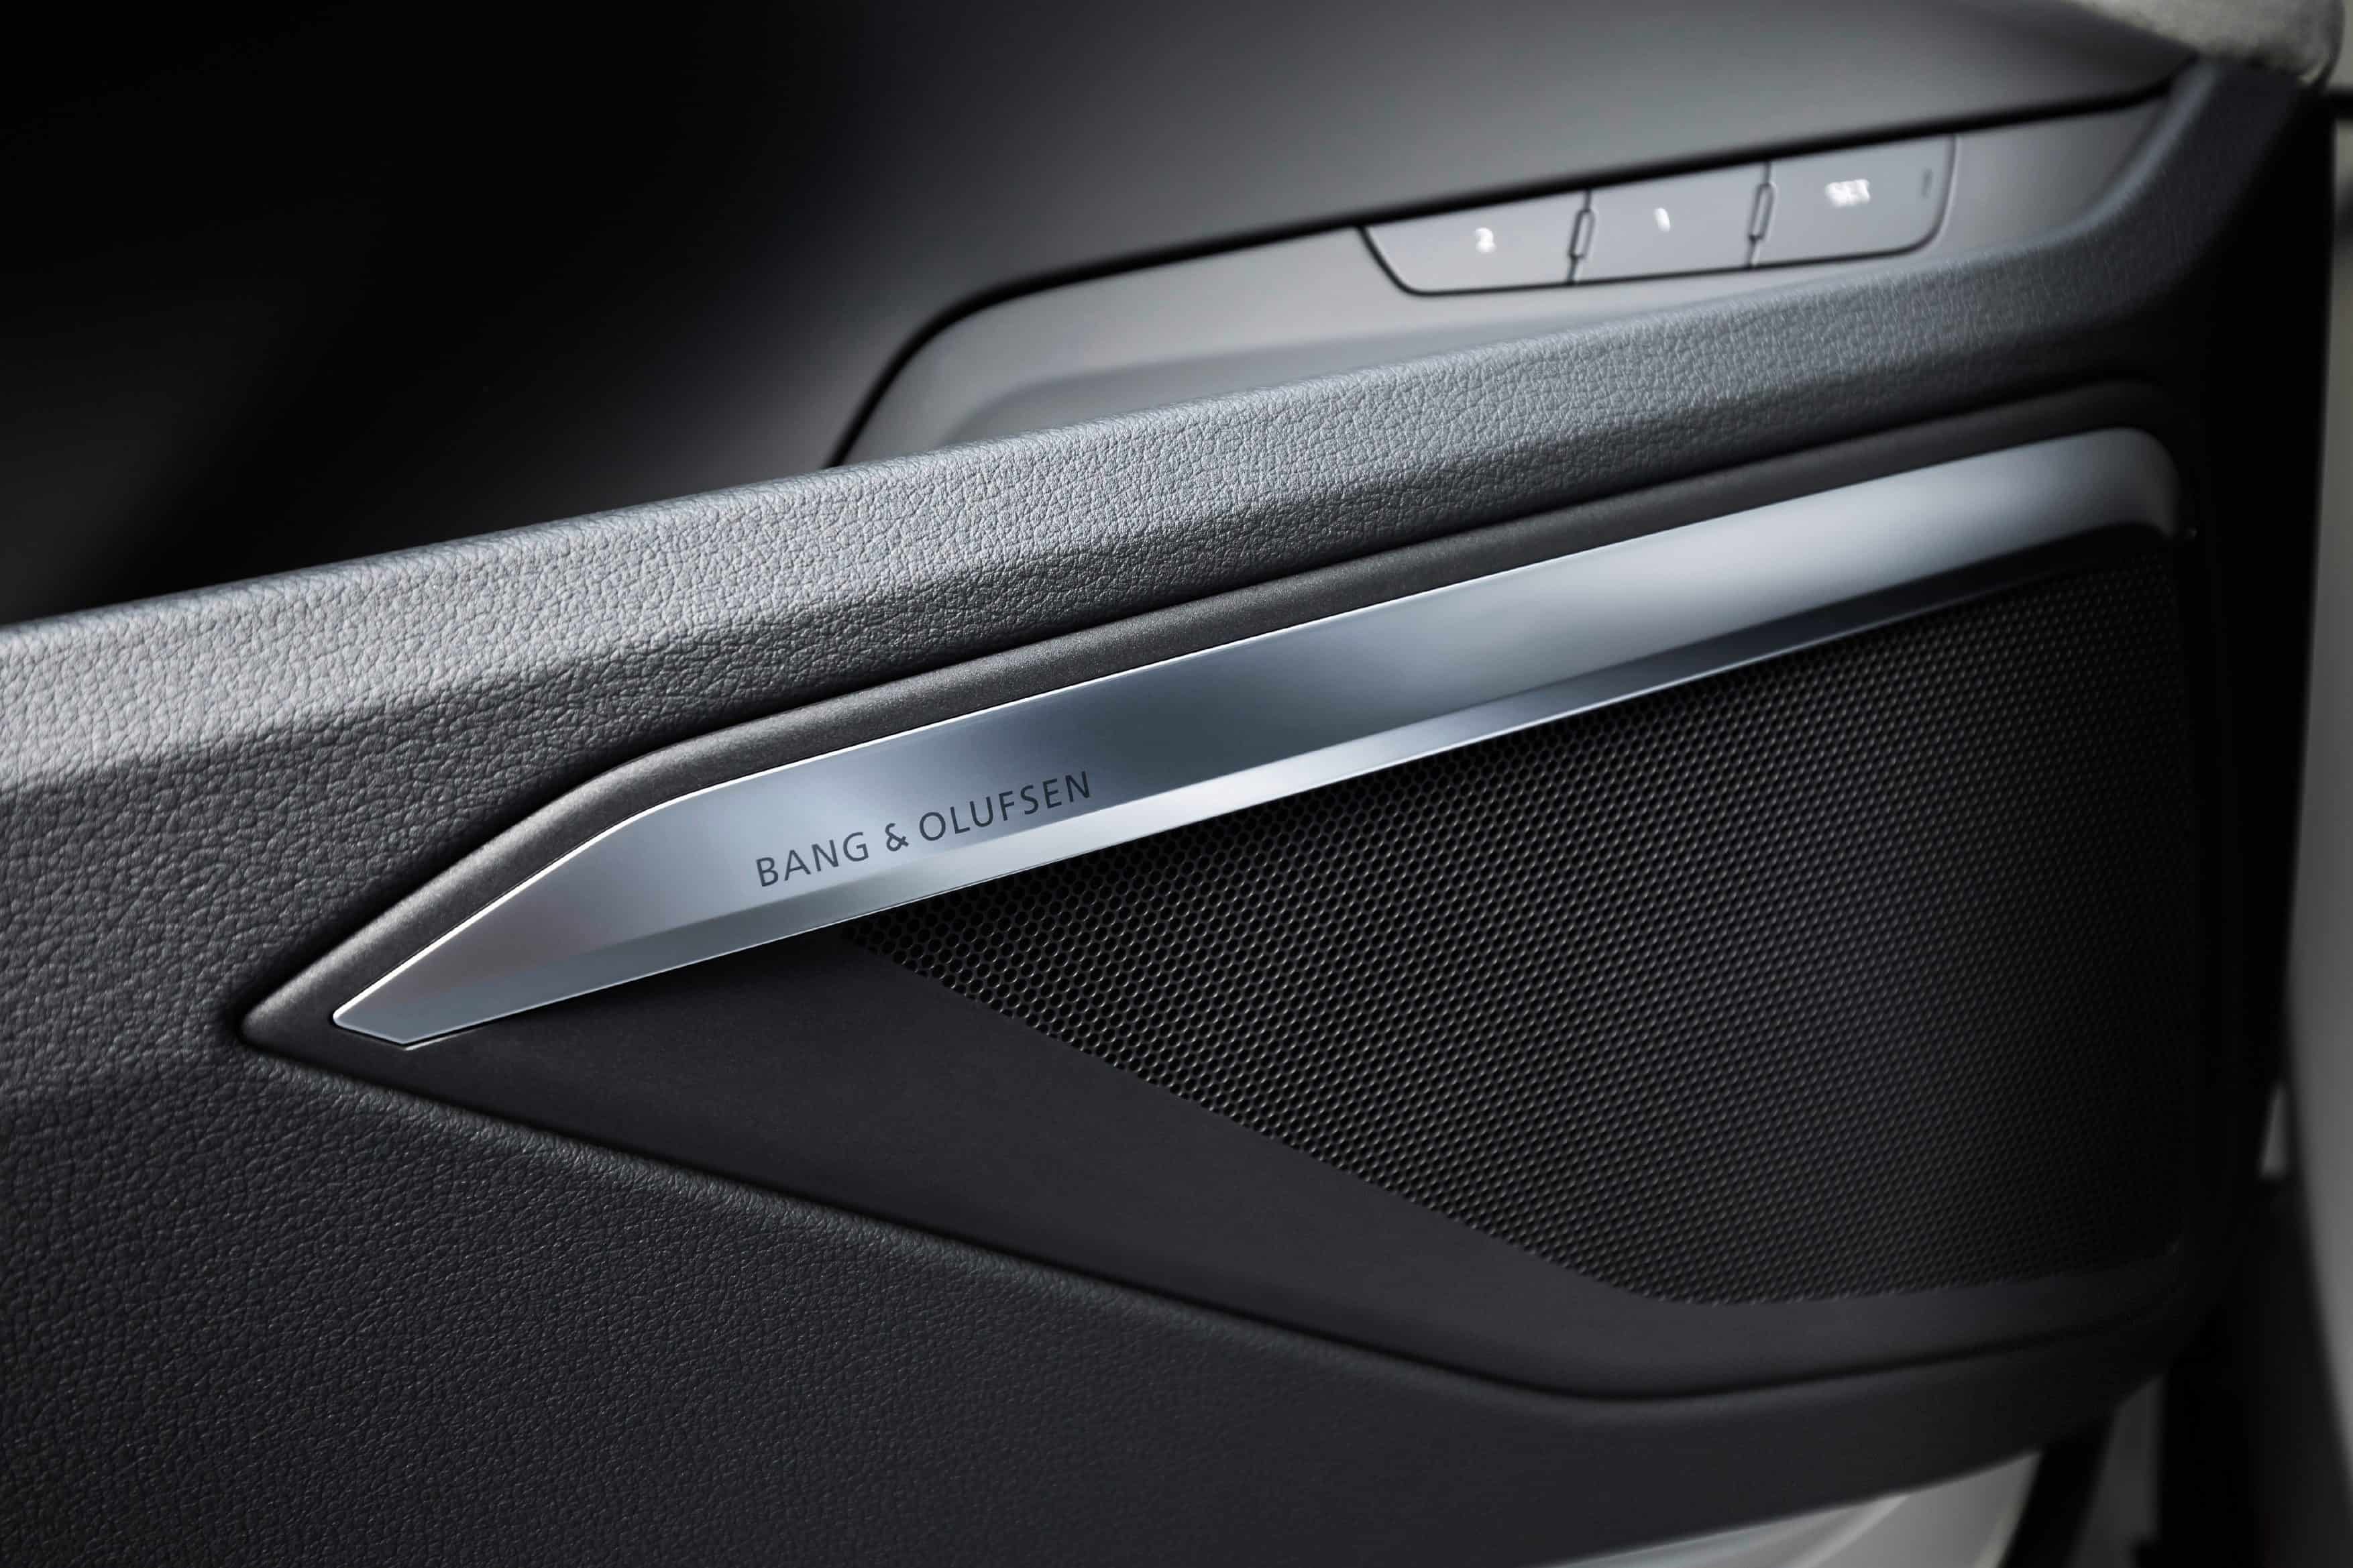 Audi unveils e-tron quattro electric SUV’s interior